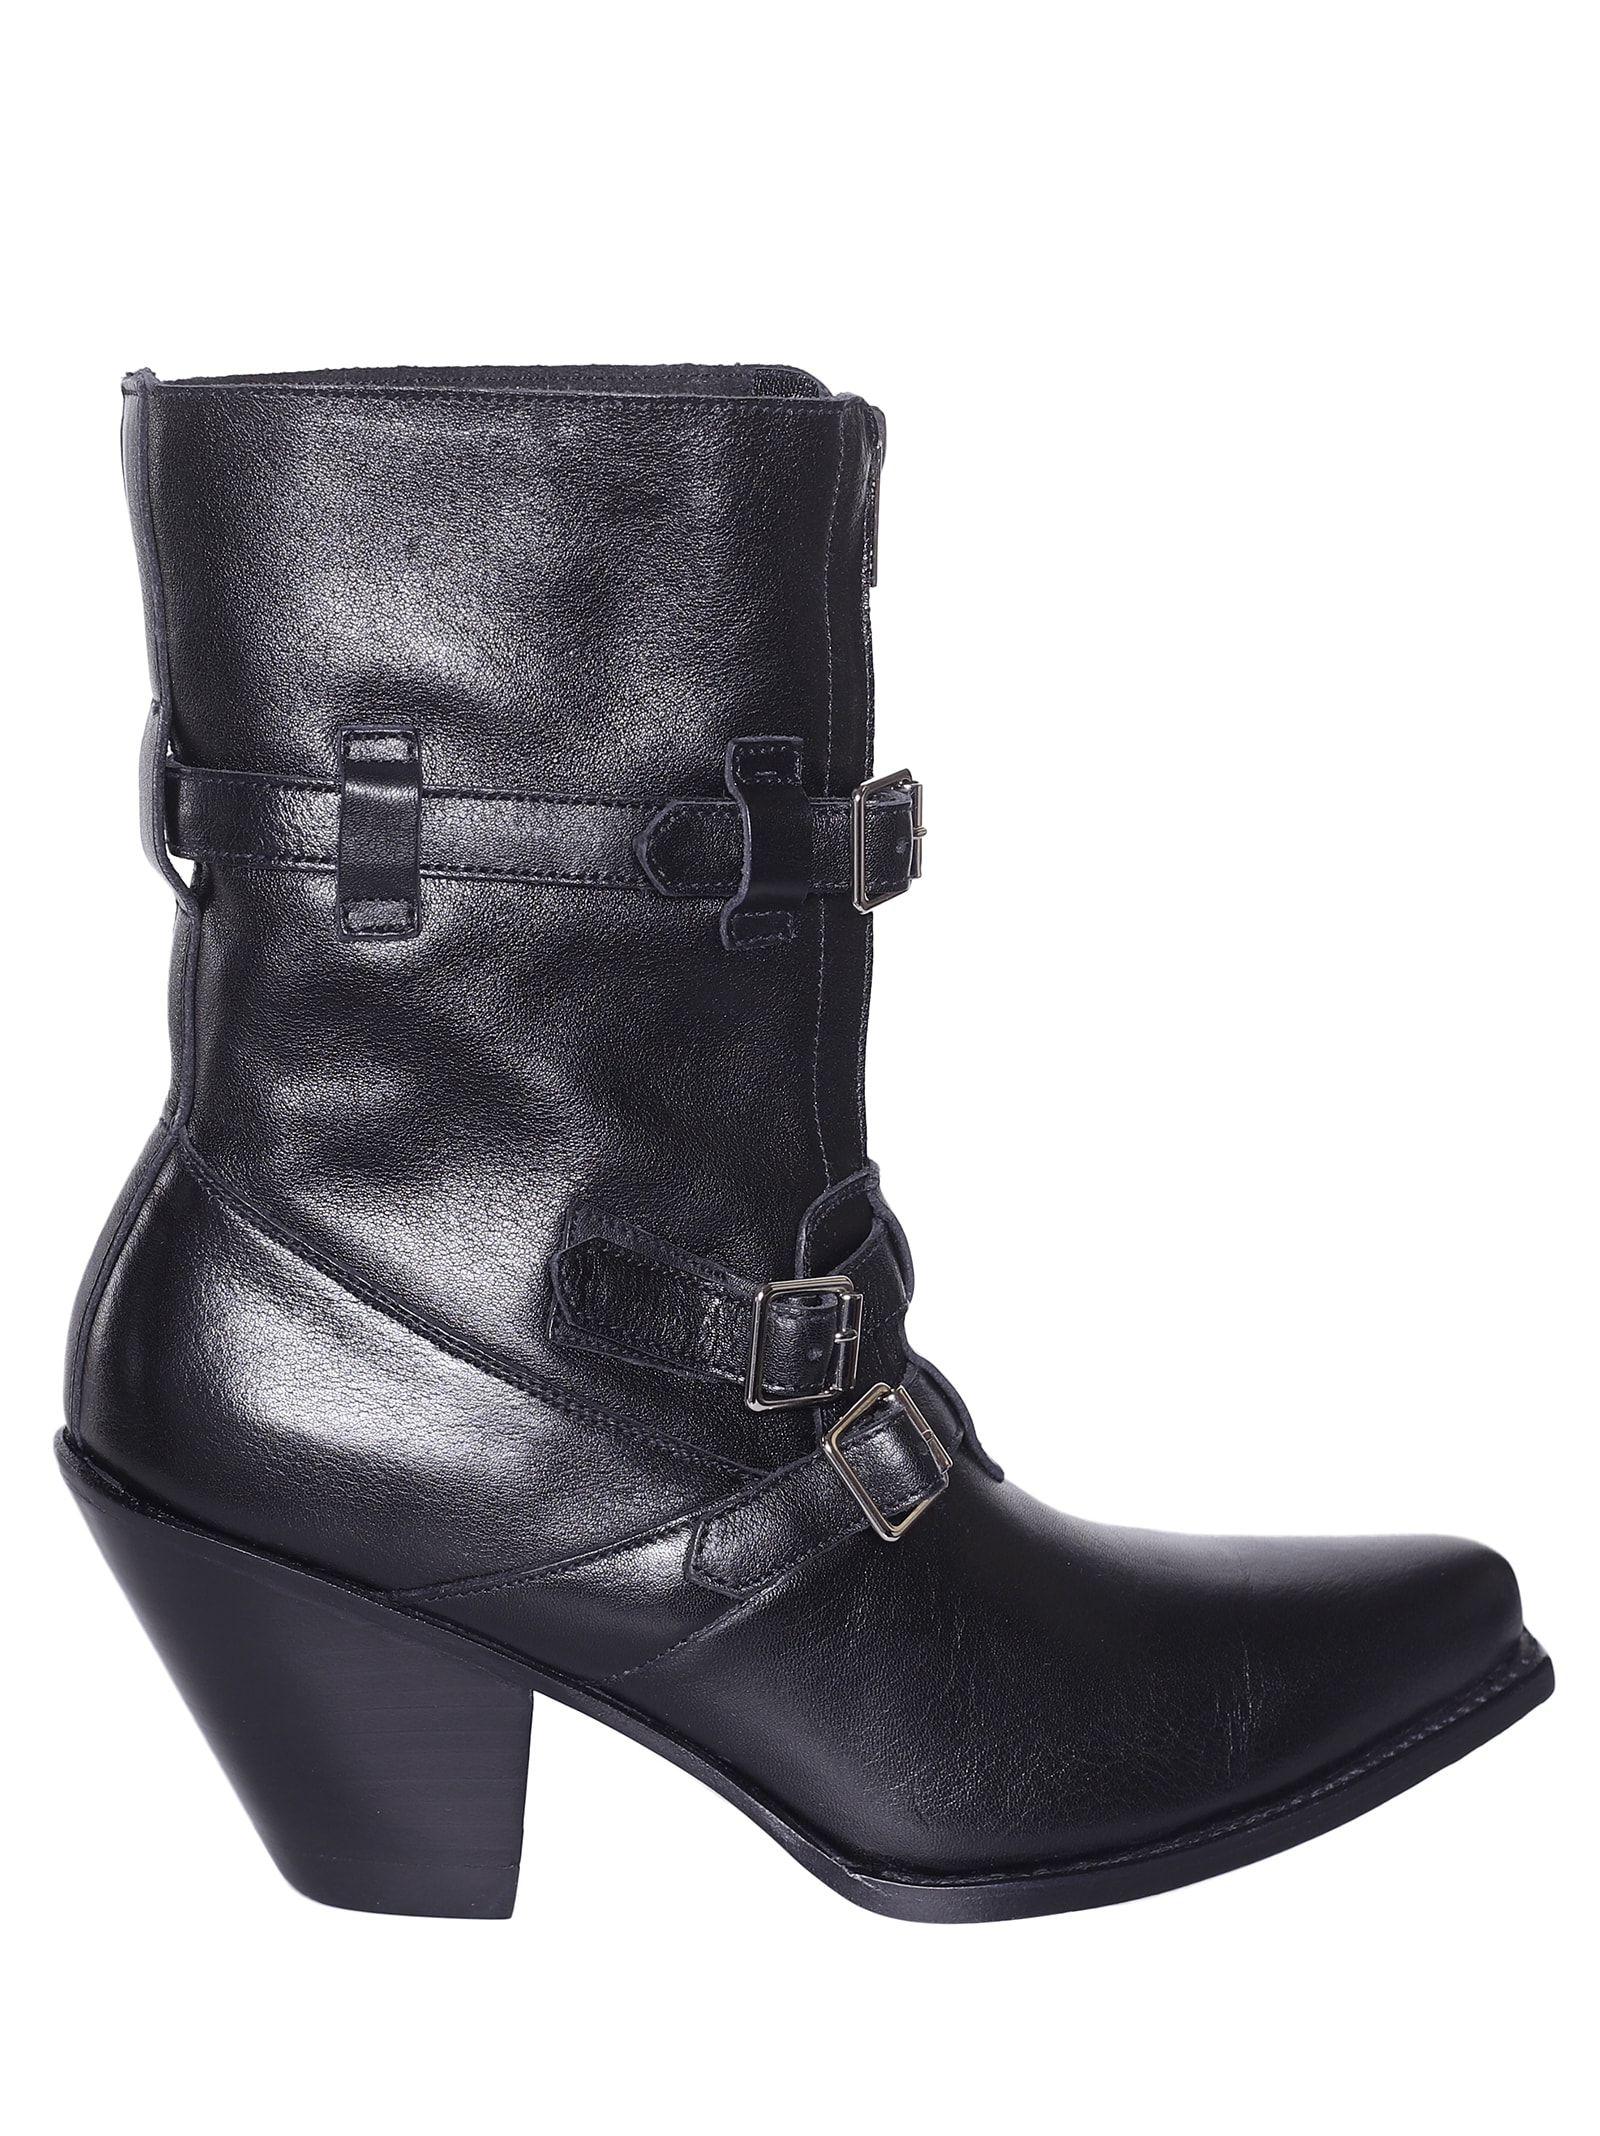 celine boots black